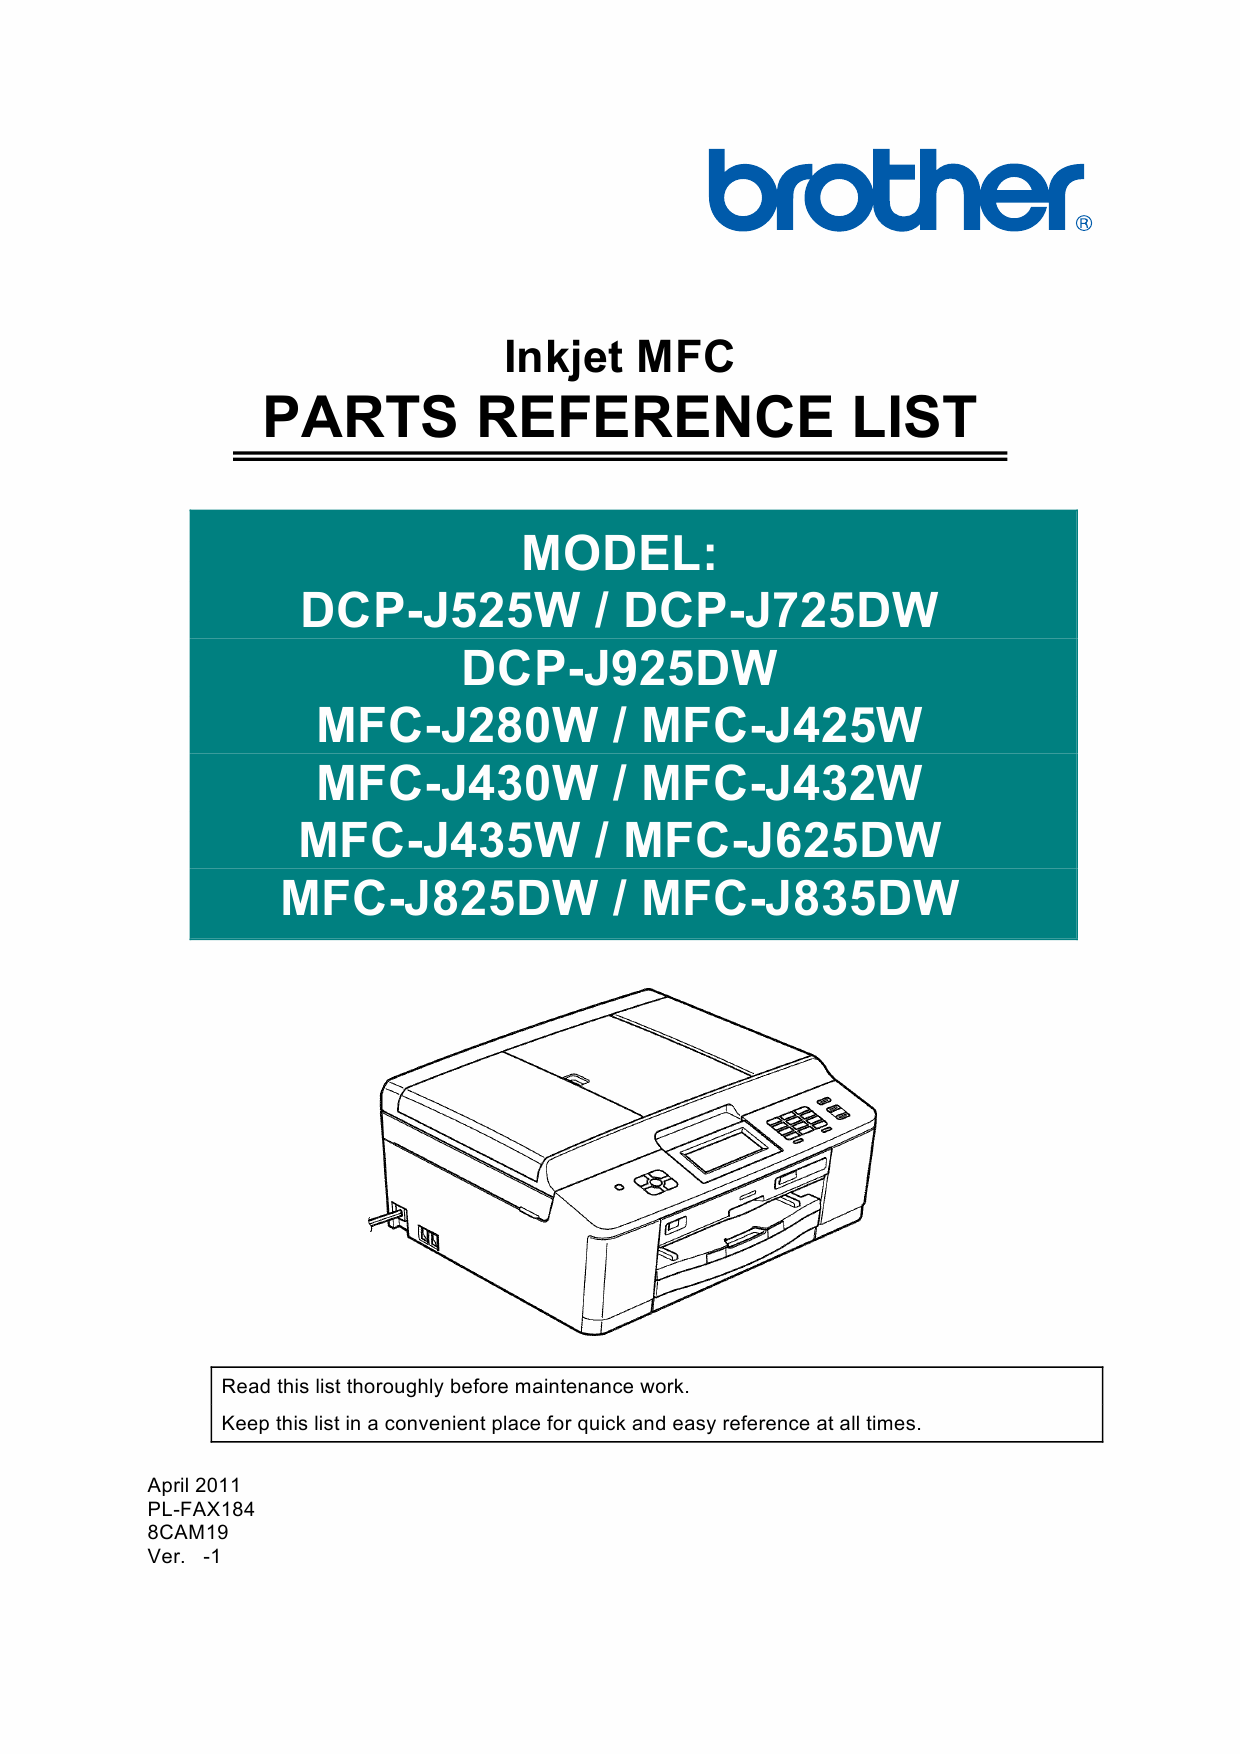 Brother Laser-MFC J280 J425 J430 J435 J625 J825 J835 W-DW DCPJ525 J725 J925 W-DW Service Manual-1